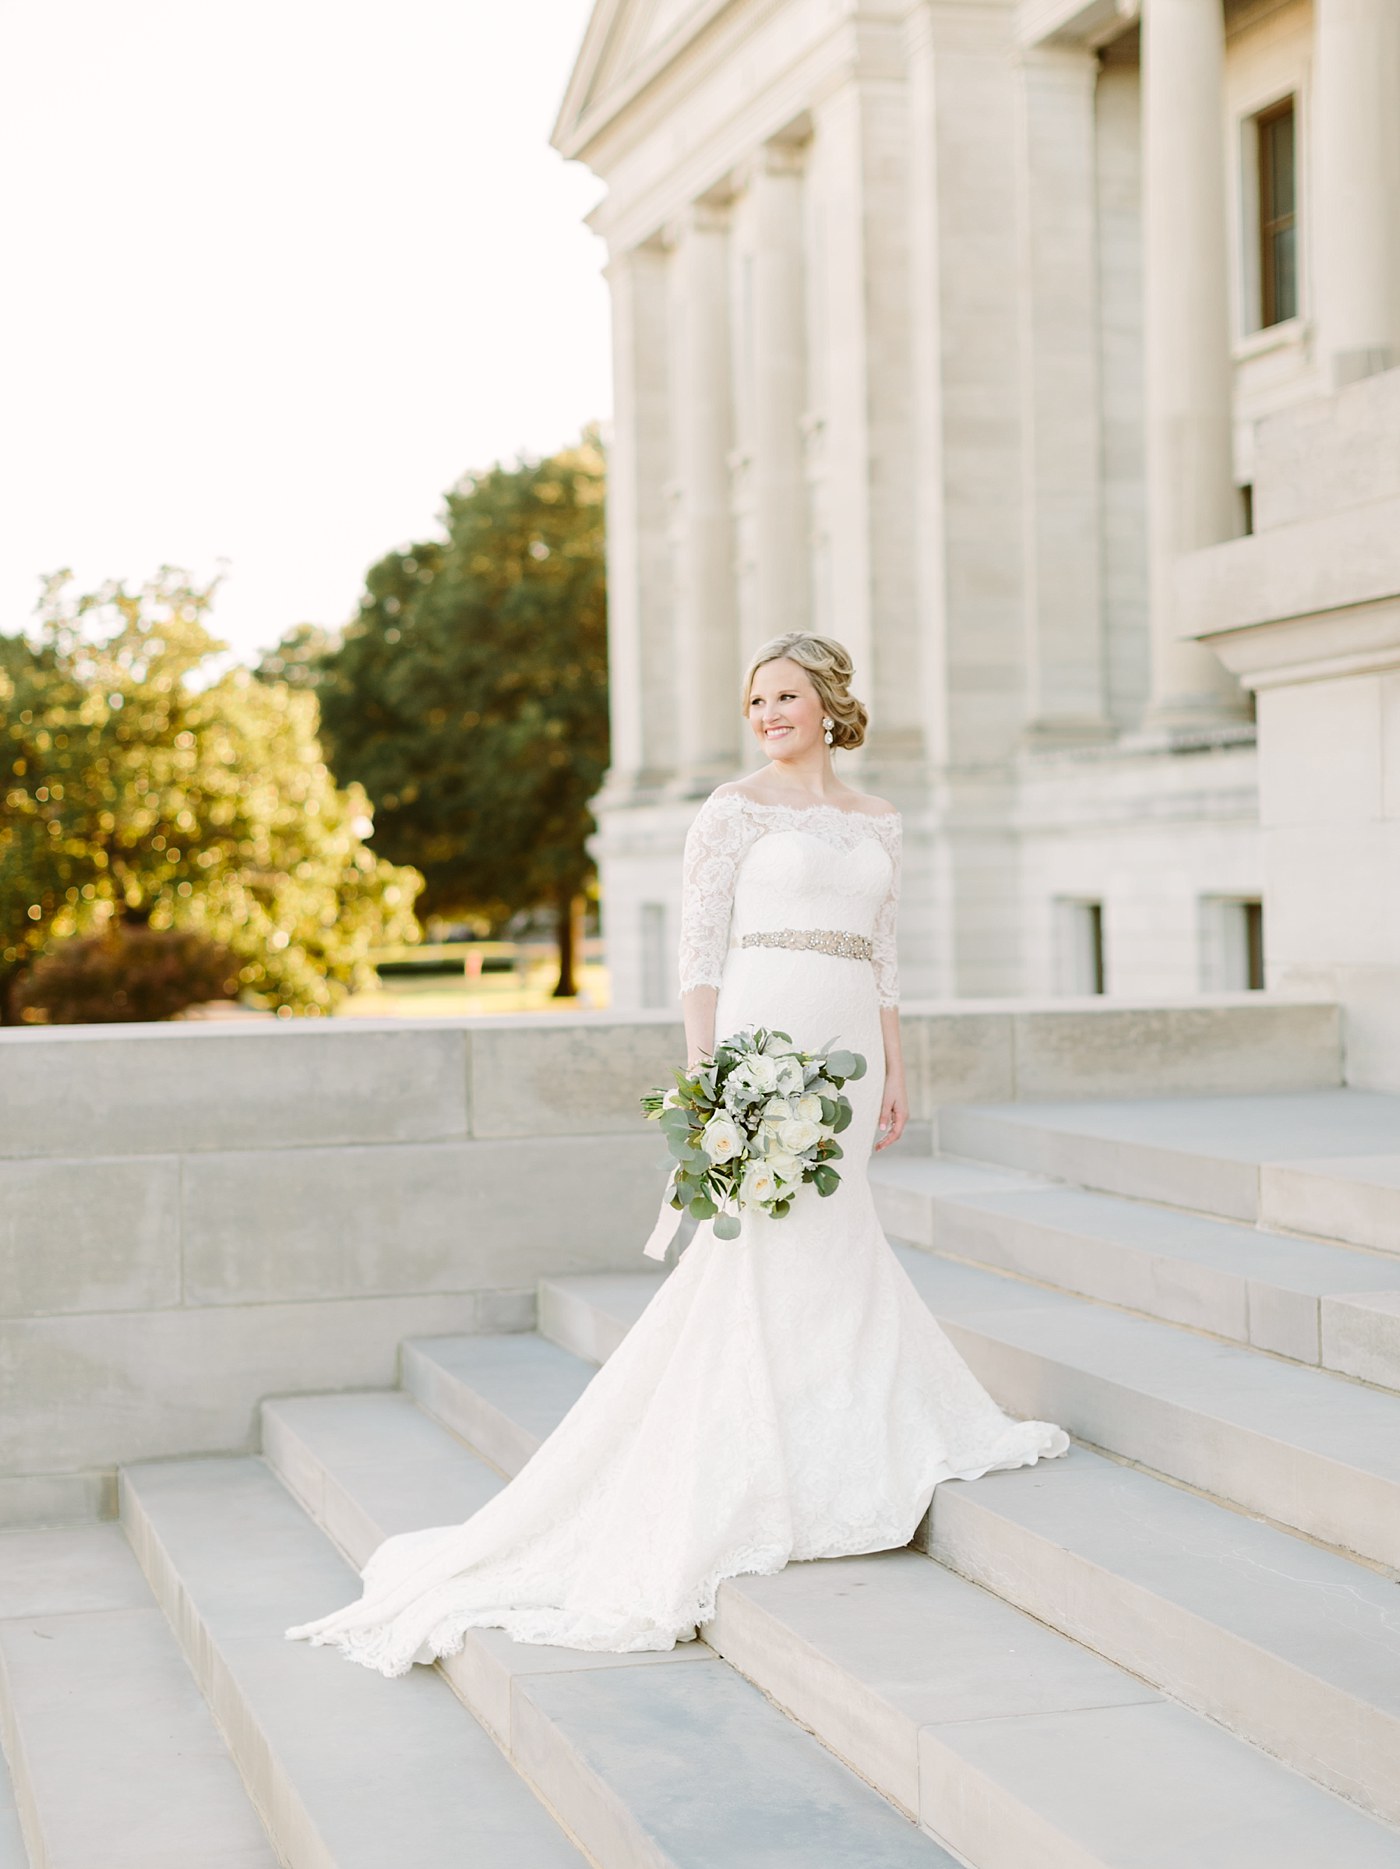 Arkansas State Capitol Bridal Session – Kati Mallory Photo & Design – www.katimallory.com